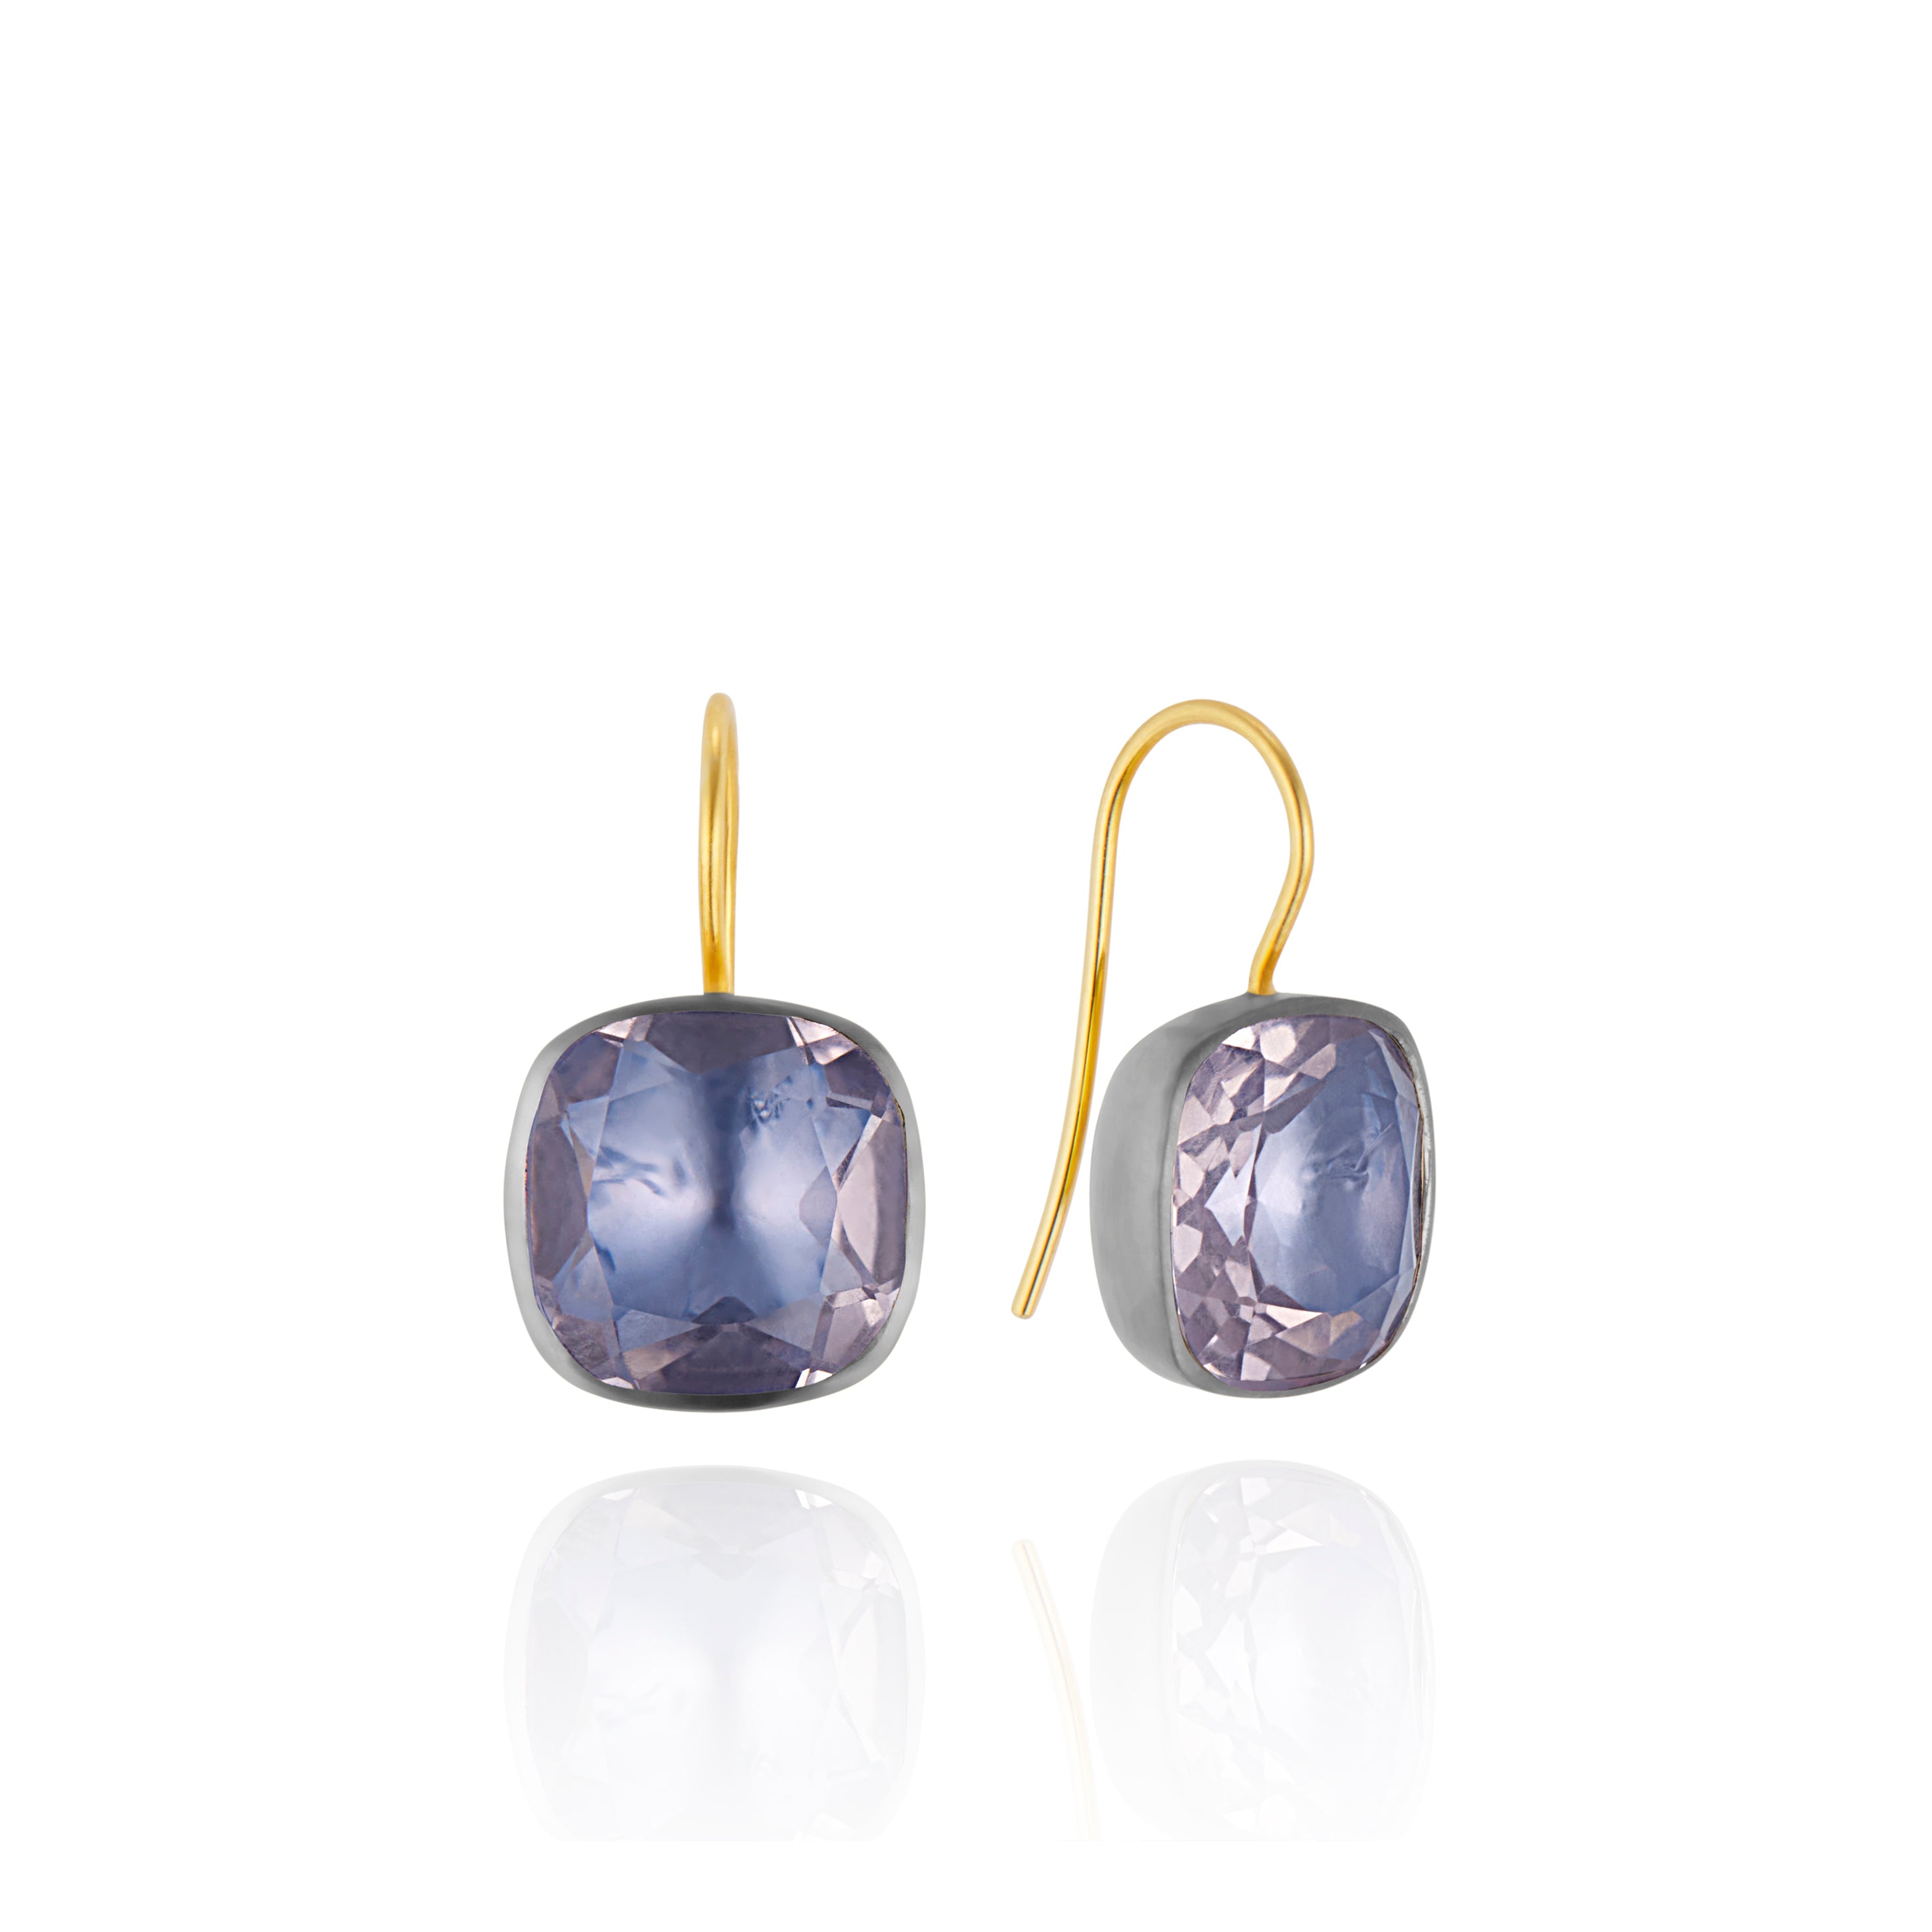 Luzia Button Earrings in Lavender Moon Quartz (Black Rhodium Wash)